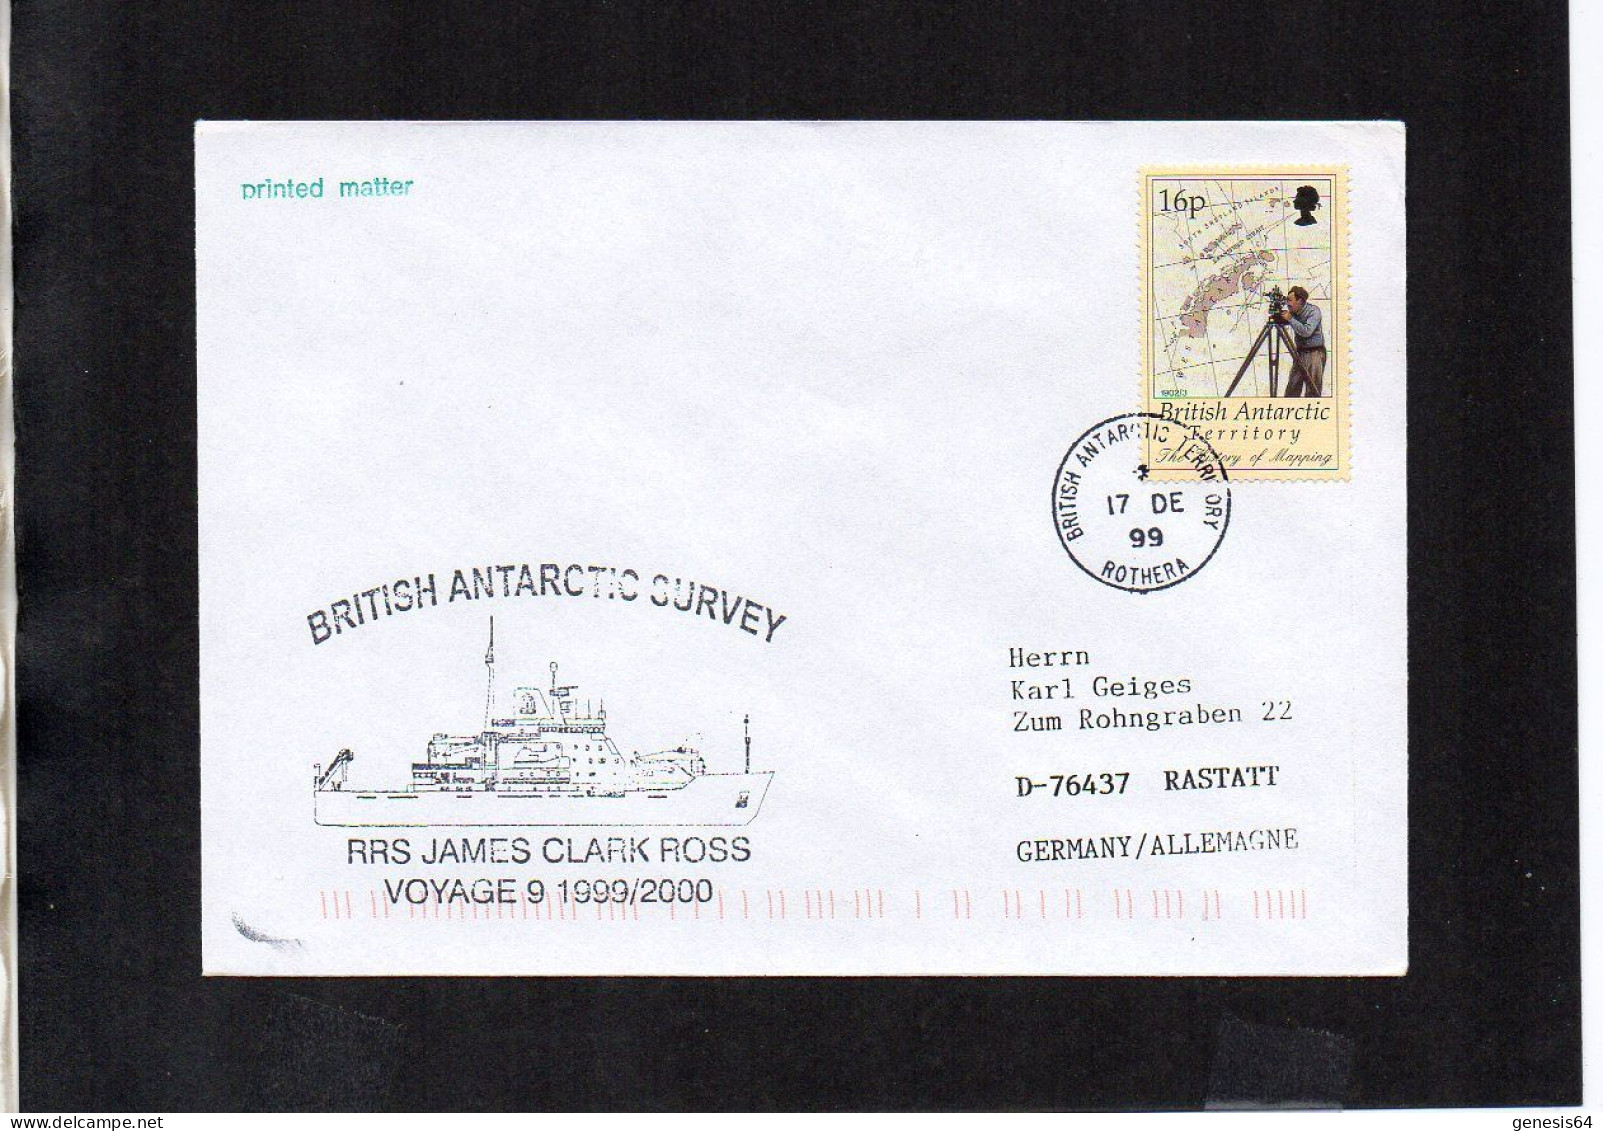 British Antarctic Territory (BAT) 1999 Cover Ship RRS James Clark Ross - Rothera 17 DE 1999 - (1ATK004) - Briefe U. Dokumente